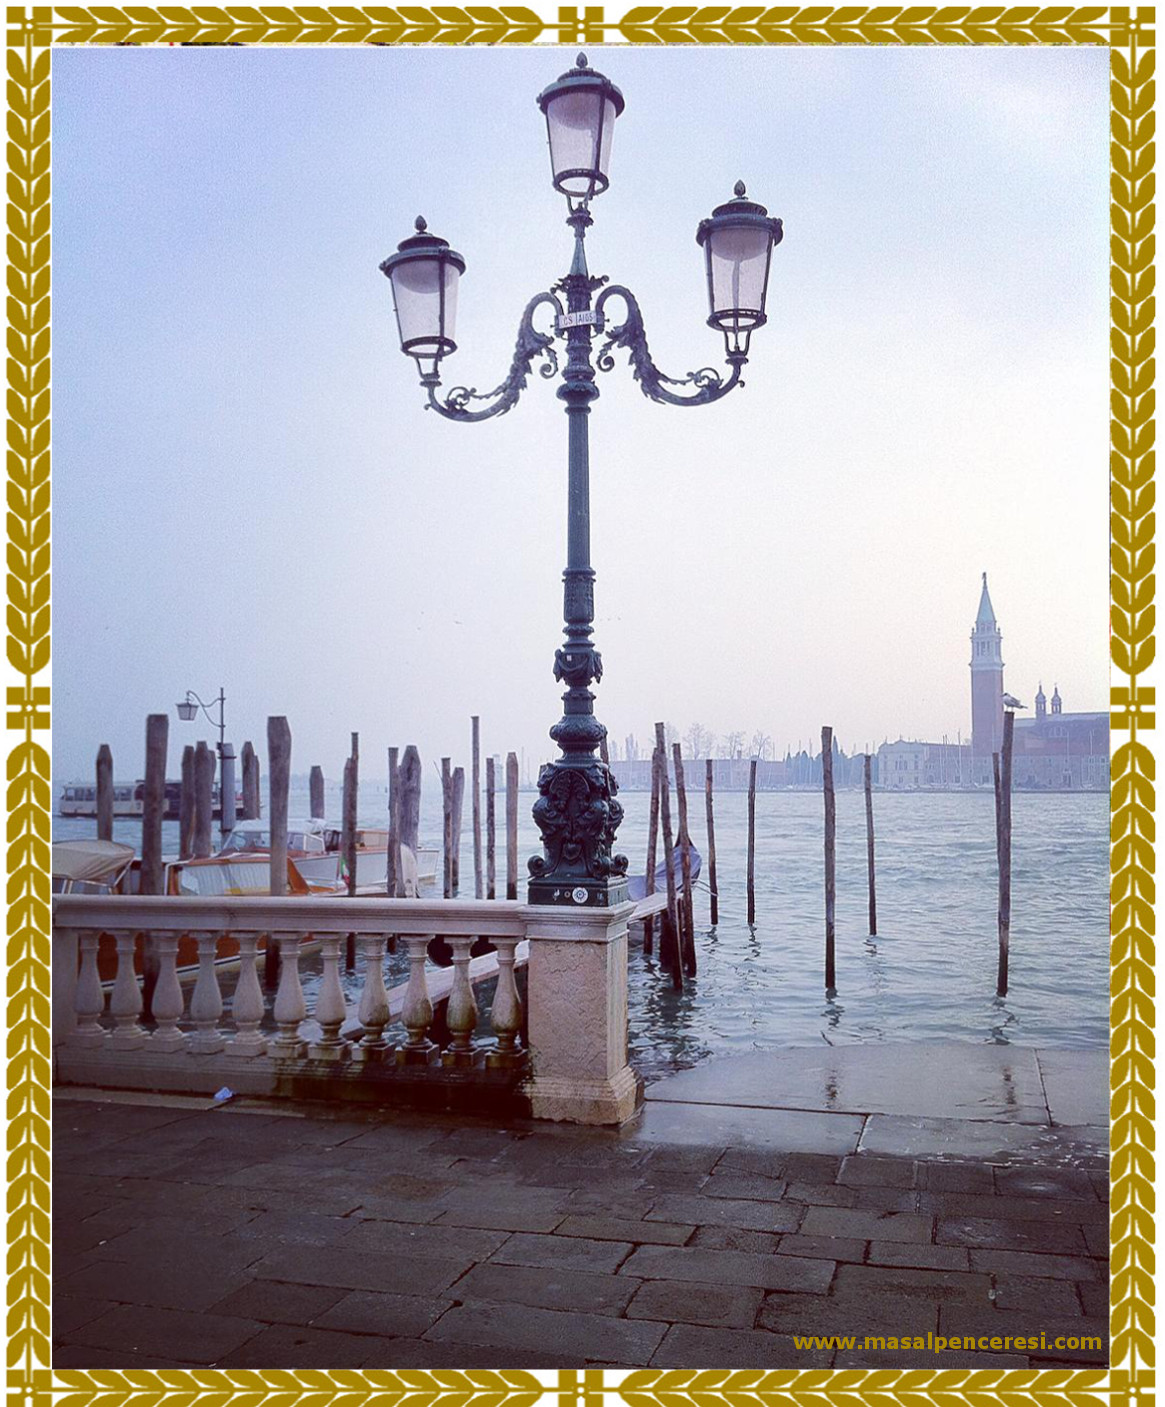 Venedik'te Lambalar, Deniz Ve Kuleler